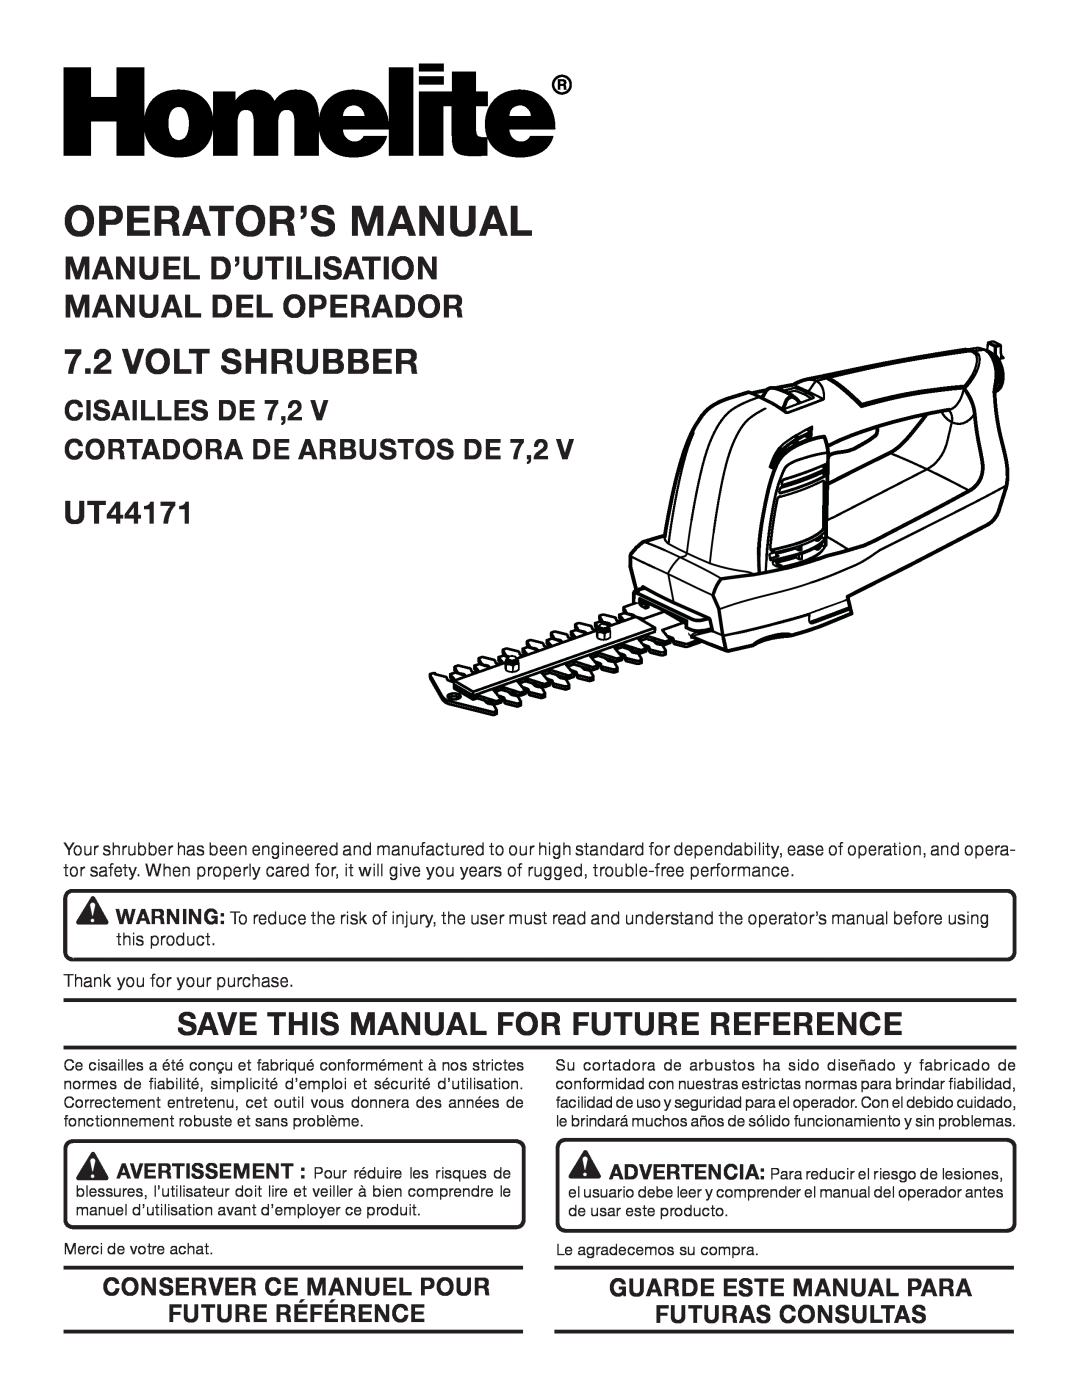 Homelite UT44171 manuel dutilisation Operator’S Manual, VOLT Shrubber, Manuel D’Utilisation Manual Del Operador 